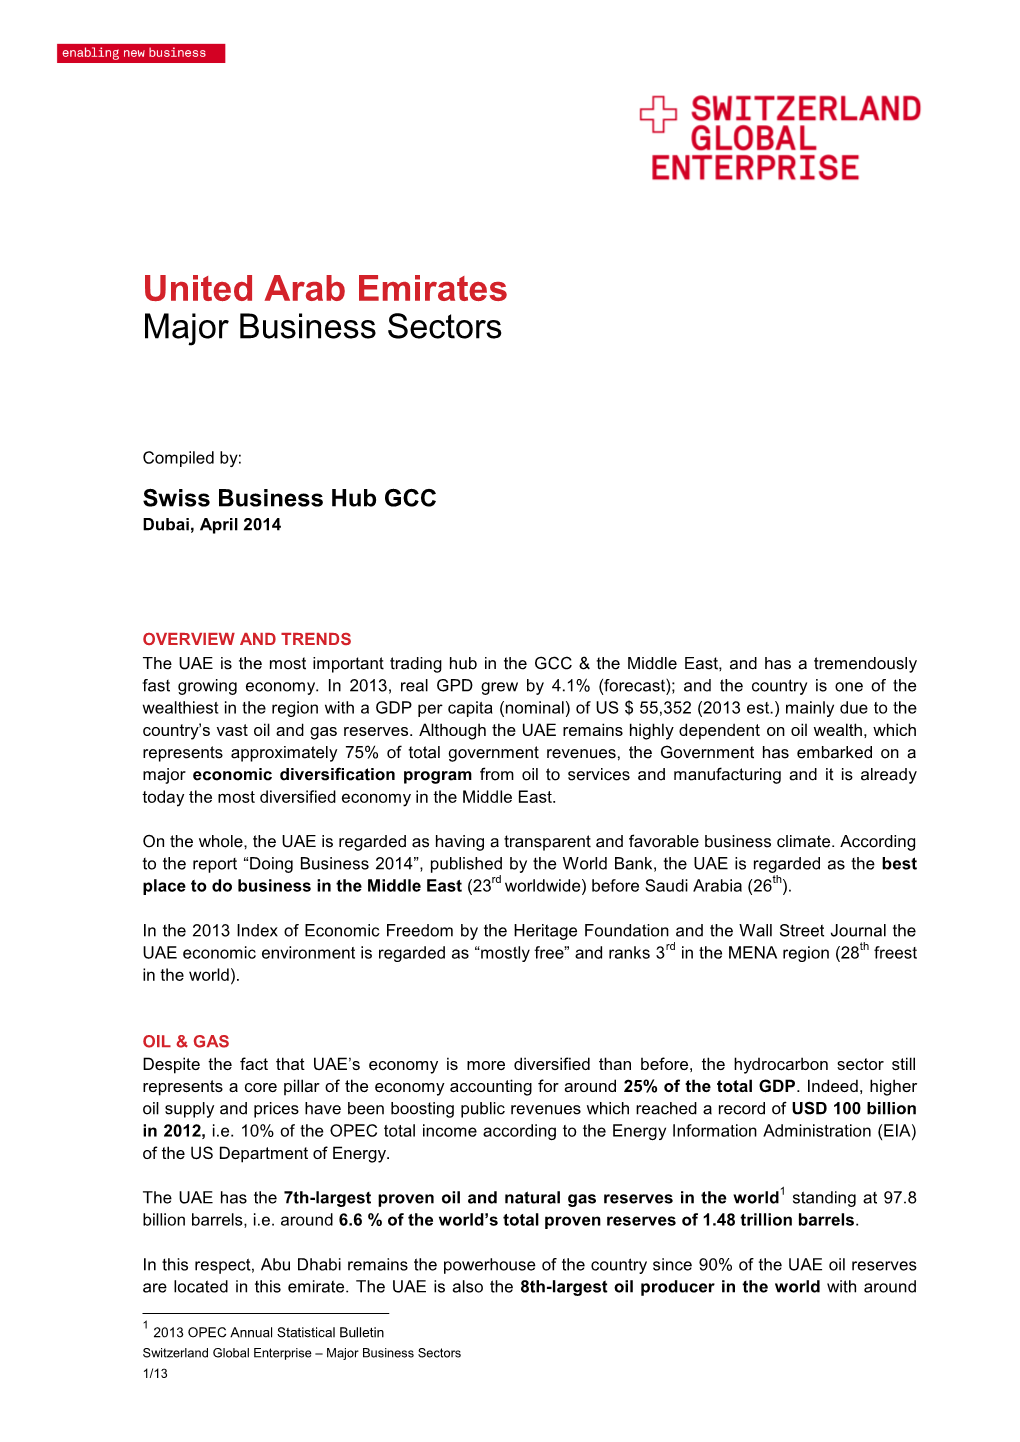 United Arab Emirates Major Business Sectors